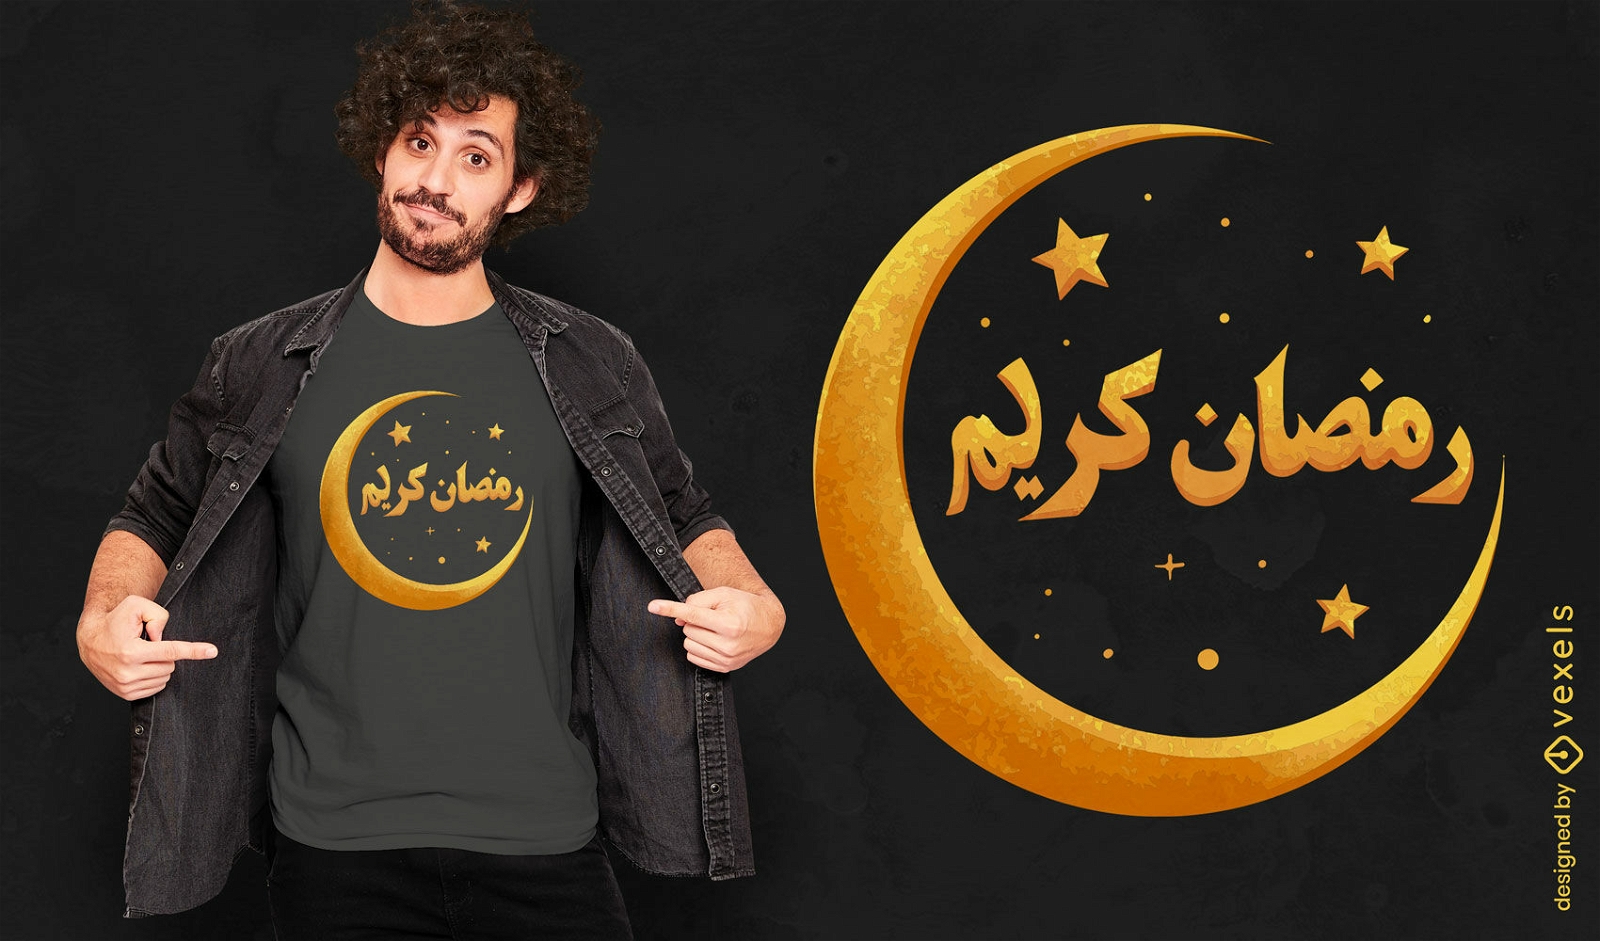 Crescent moon and stars t-shirt design